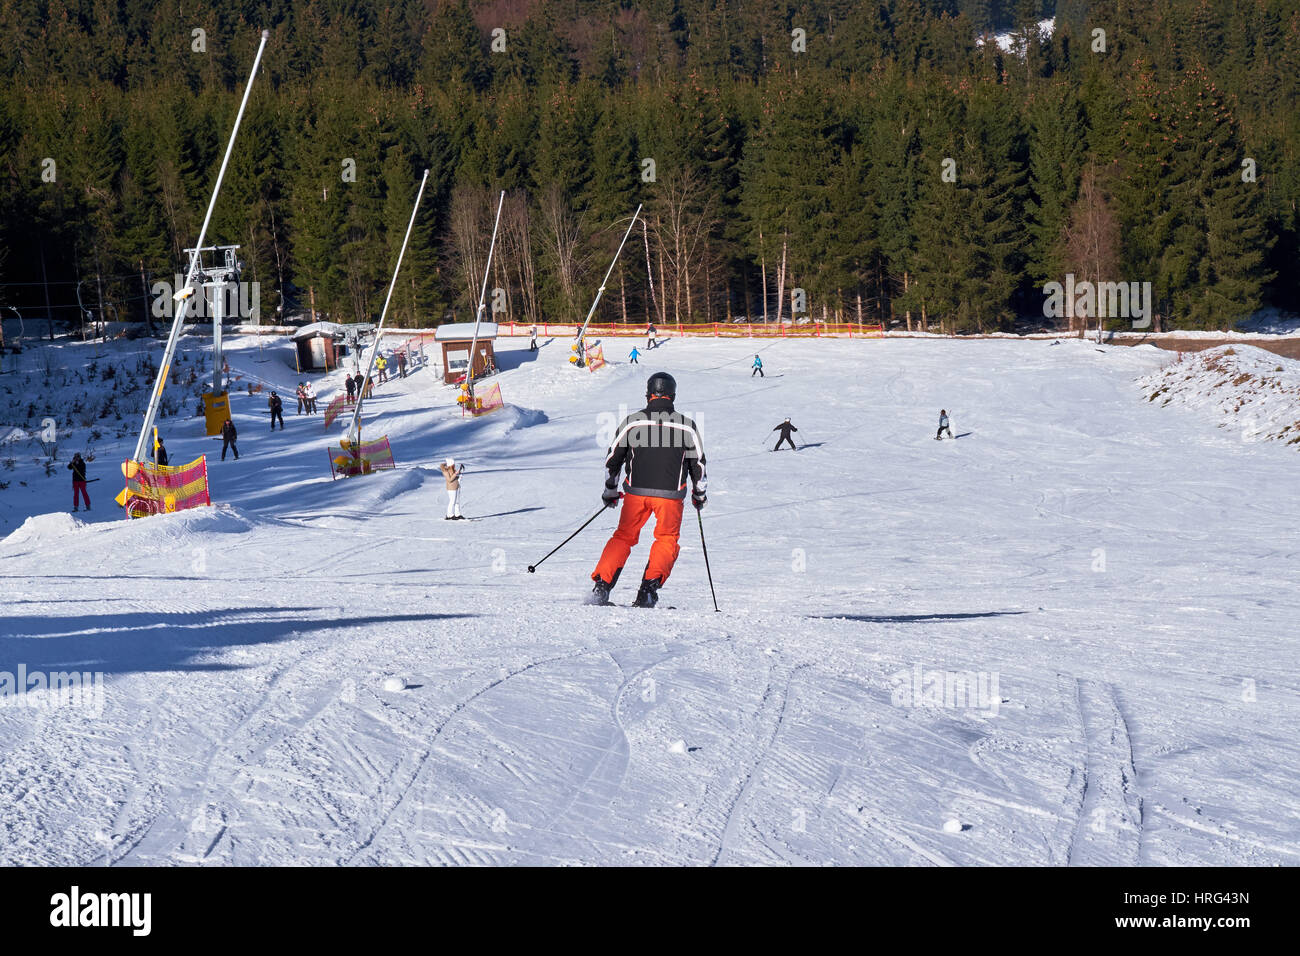 WINTERBERG, GERMANY - FEBRUARY 15, 2017: Man wearing orange ski pants ...